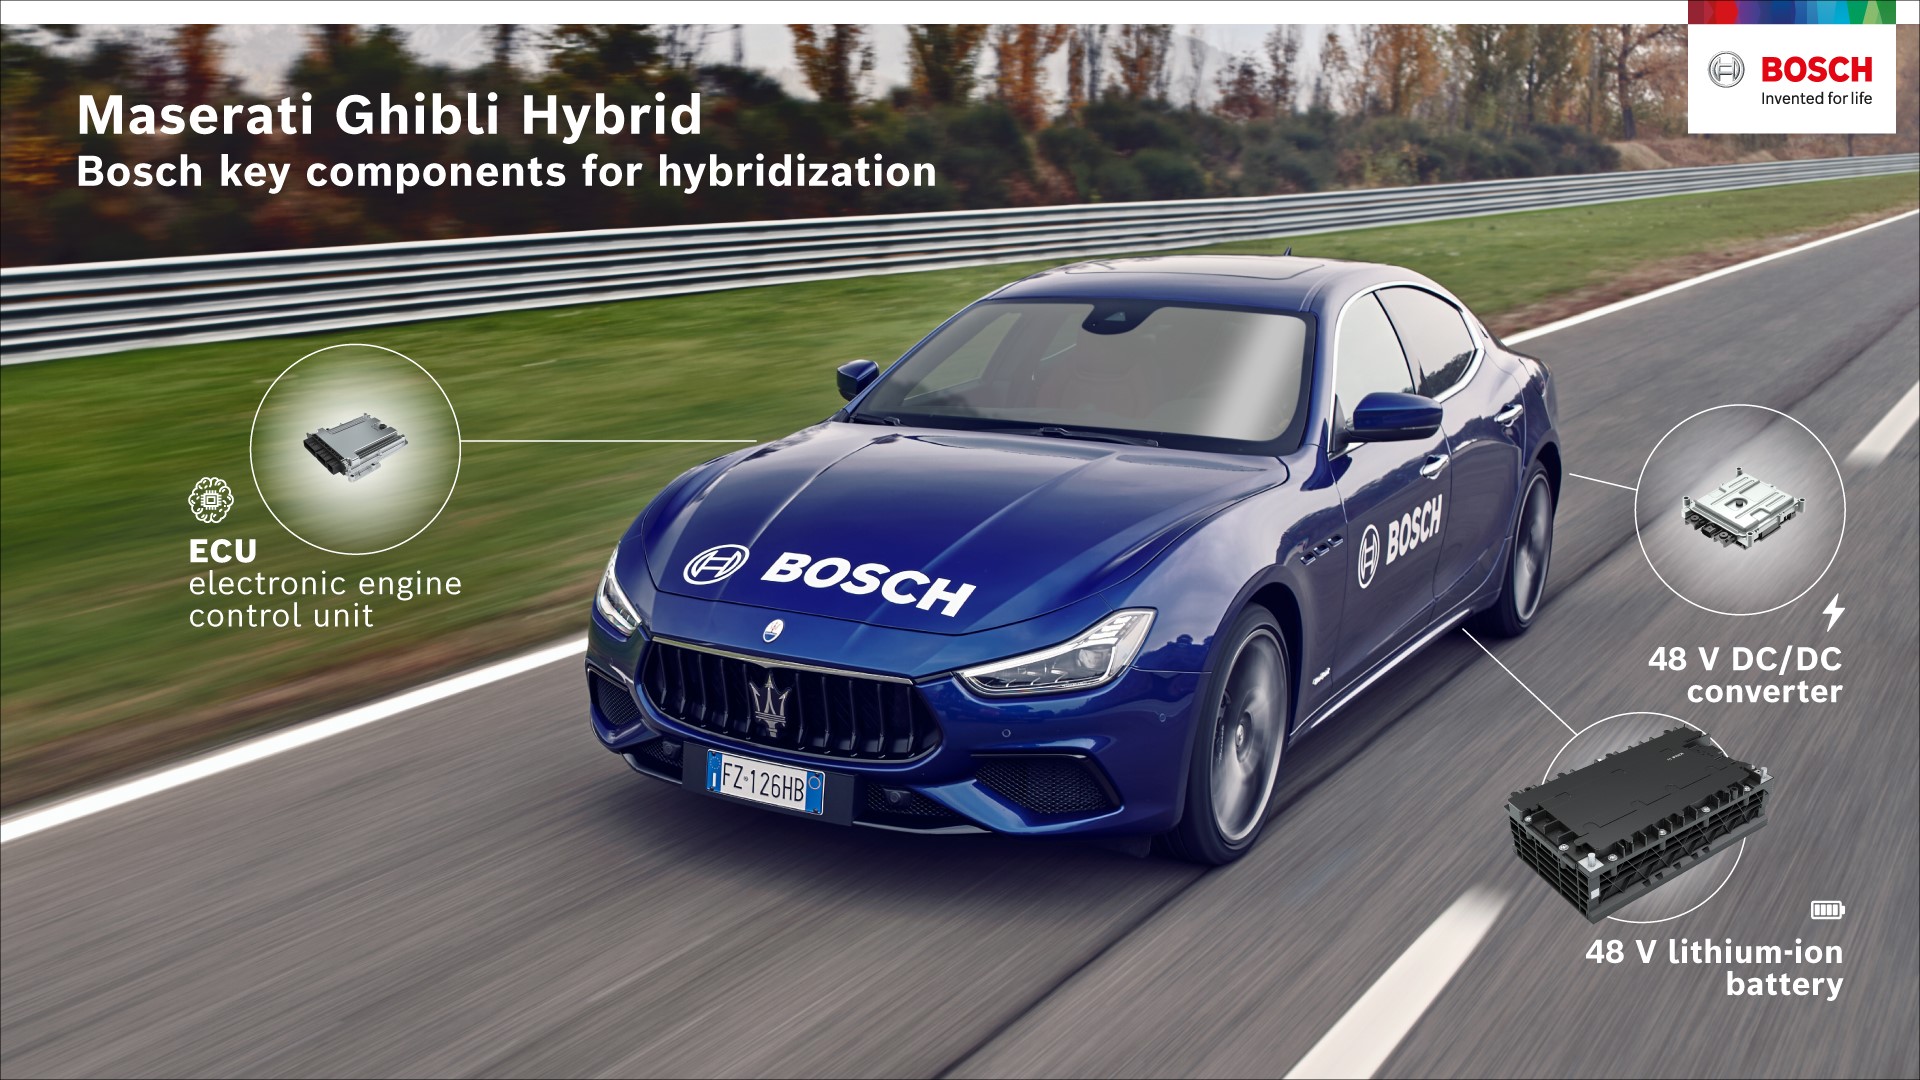 Maserati Ghibli Hybrid - Bosch key components for hybridization